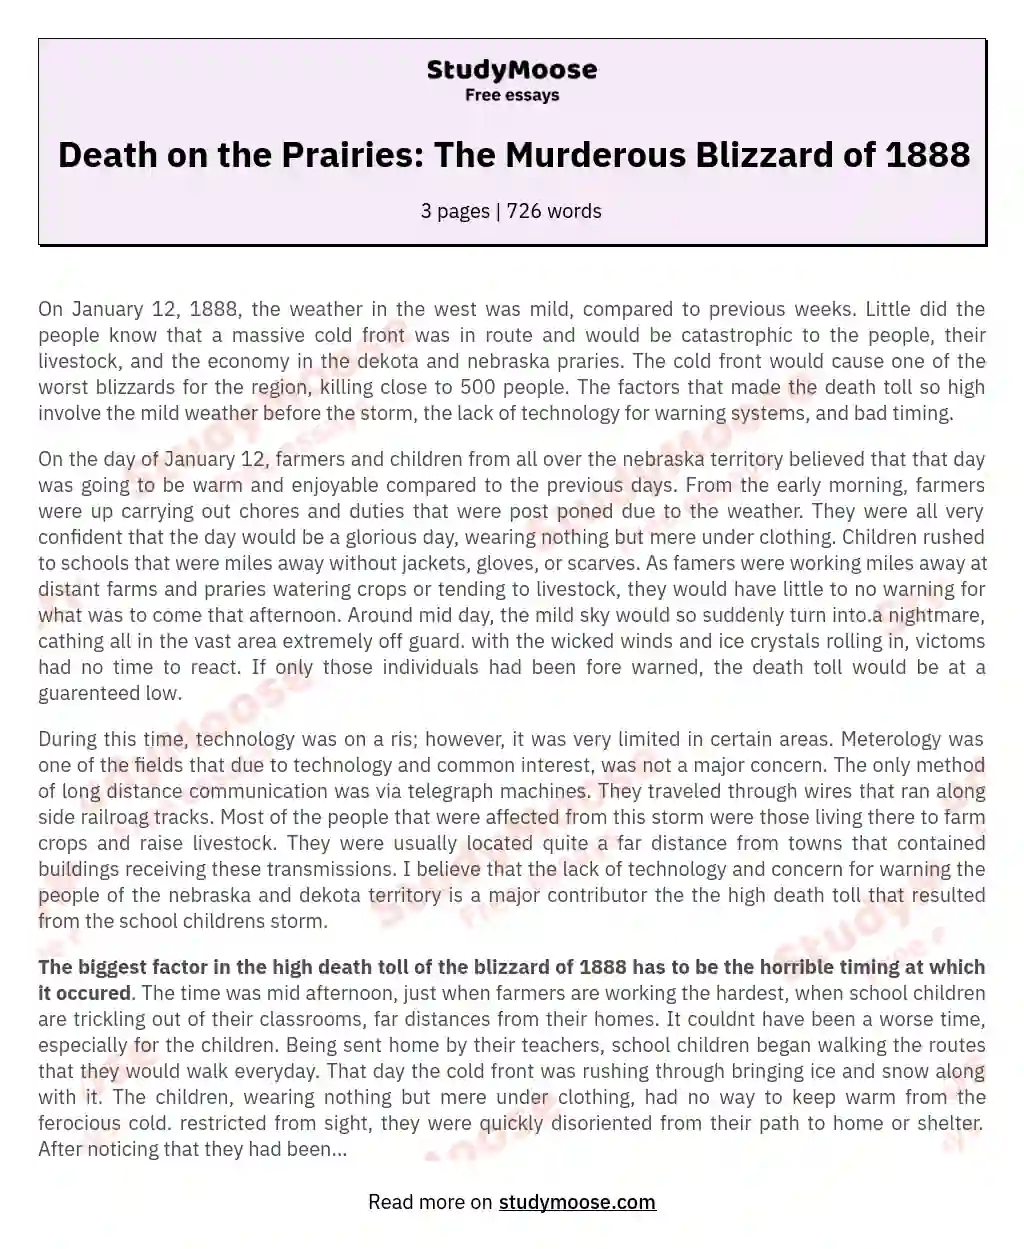 Death on the Prairies: The Murderous Blizzard of 1888 essay